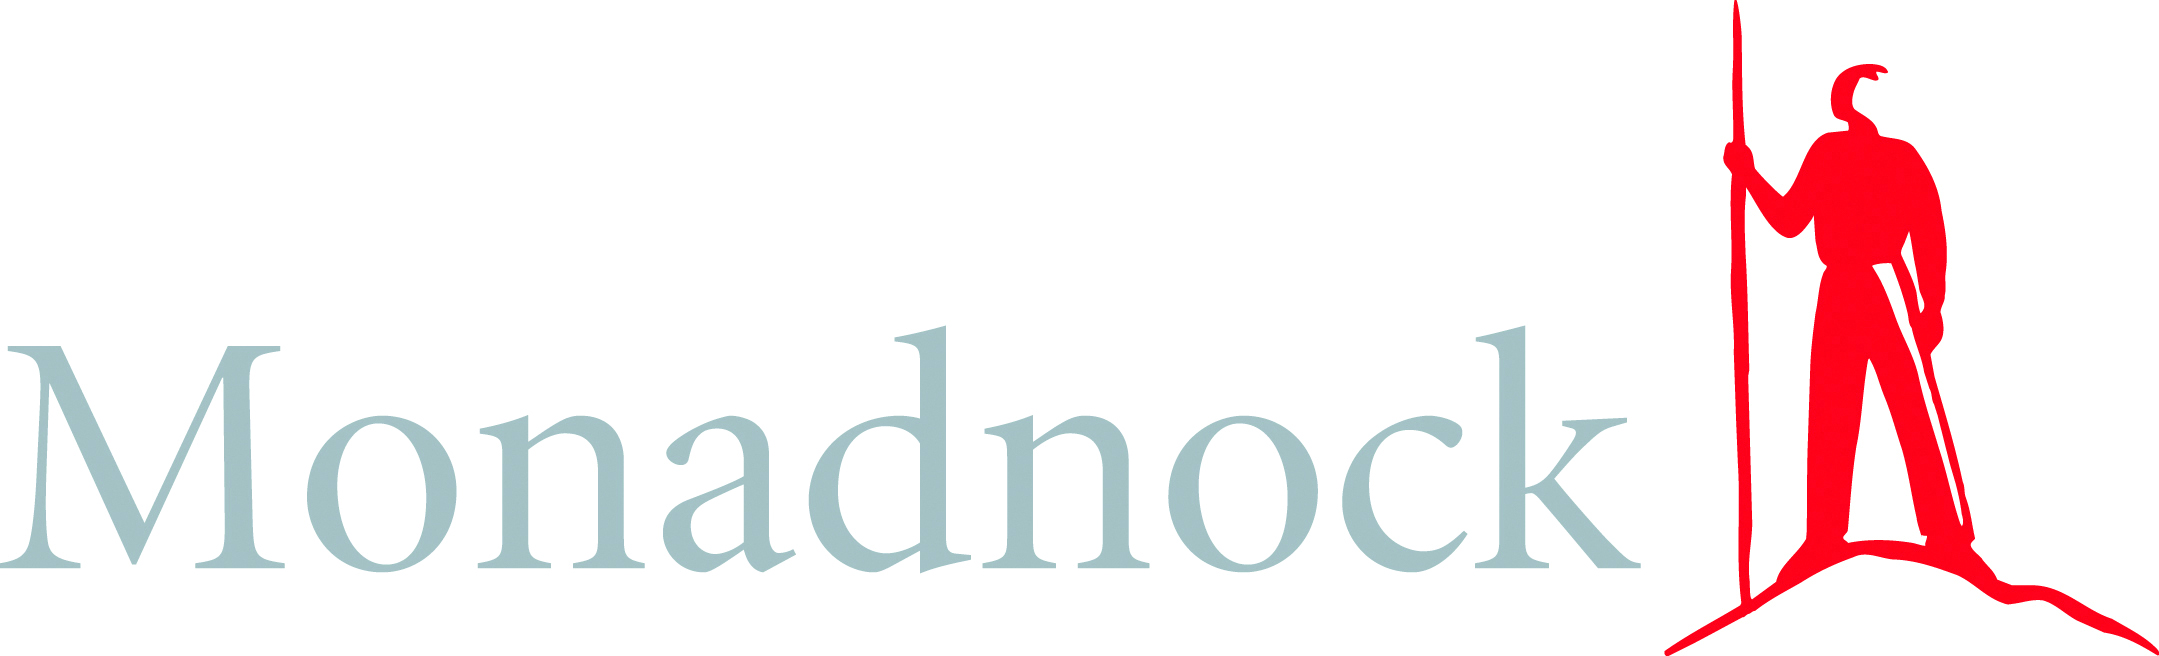 Monadnock Logo